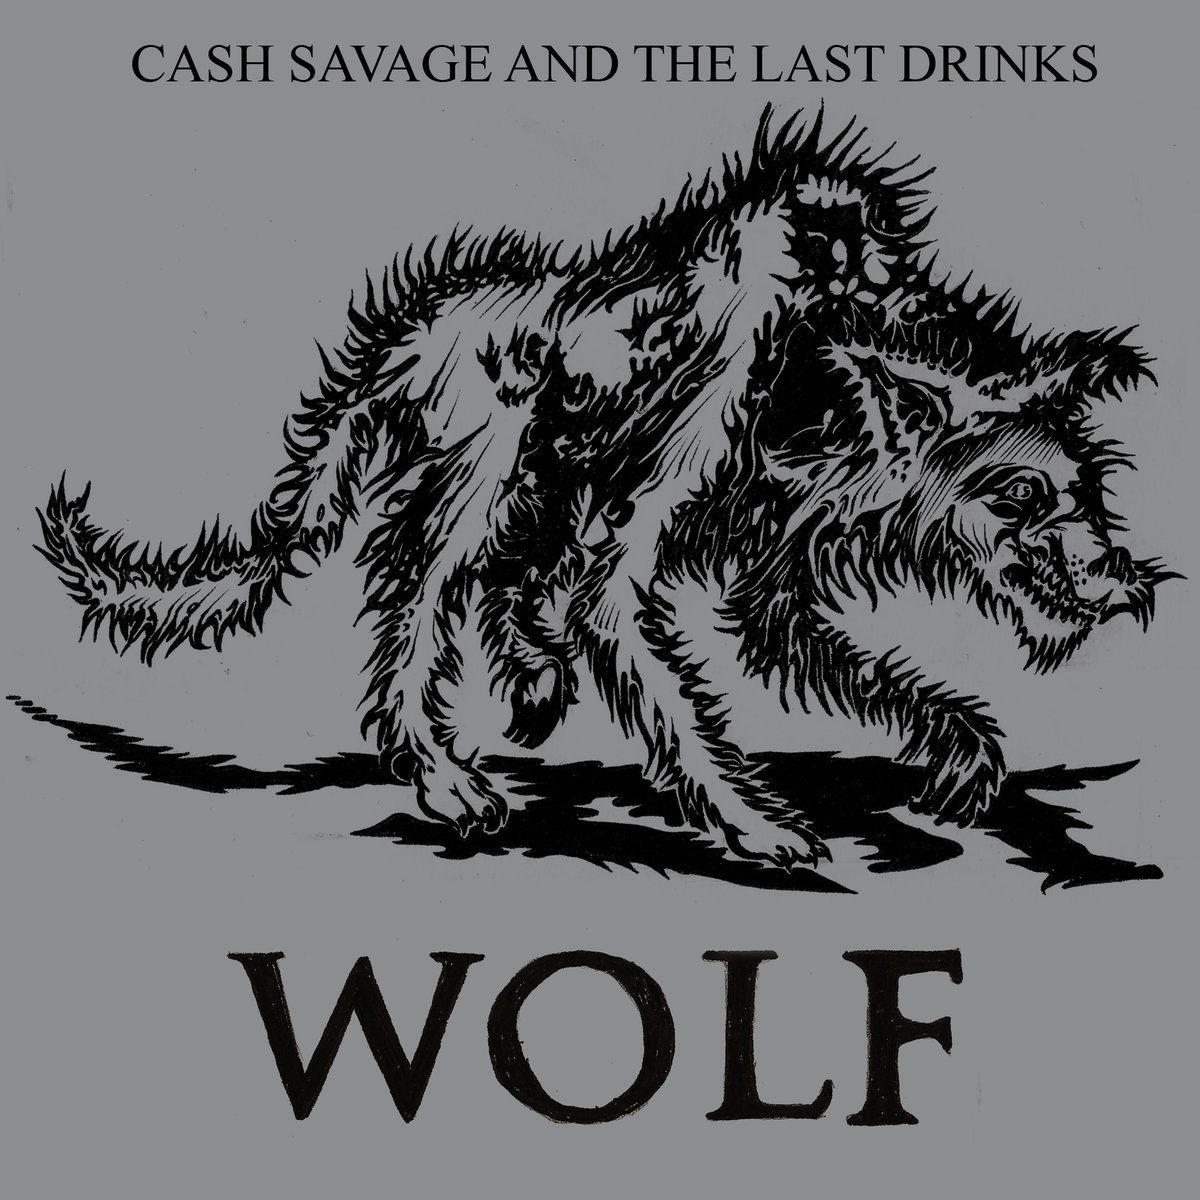 Savage Wolf Logo - WOLF. Cash Savage and The Last Drinks